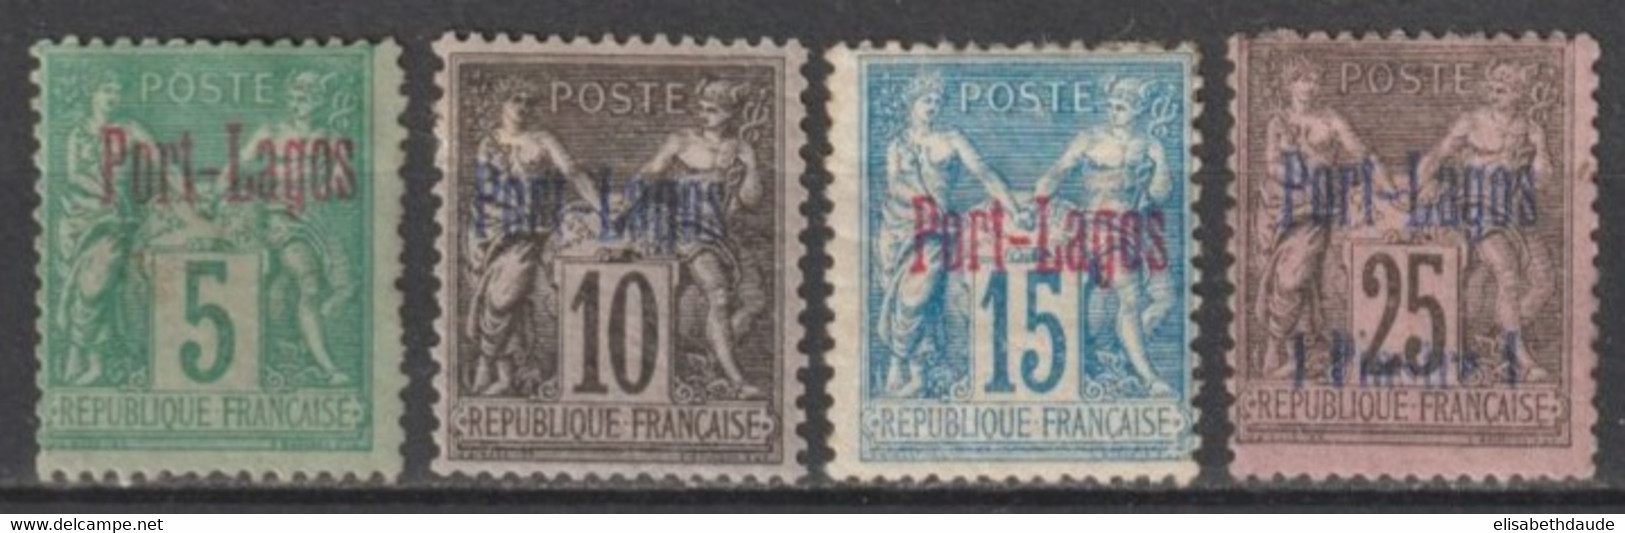 PORT LAGOS - 1893 - YVERT N° 1/4 * MH CHARNIERE ASSEZ FORTE - COTE = 335 EUR. - Ungebraucht